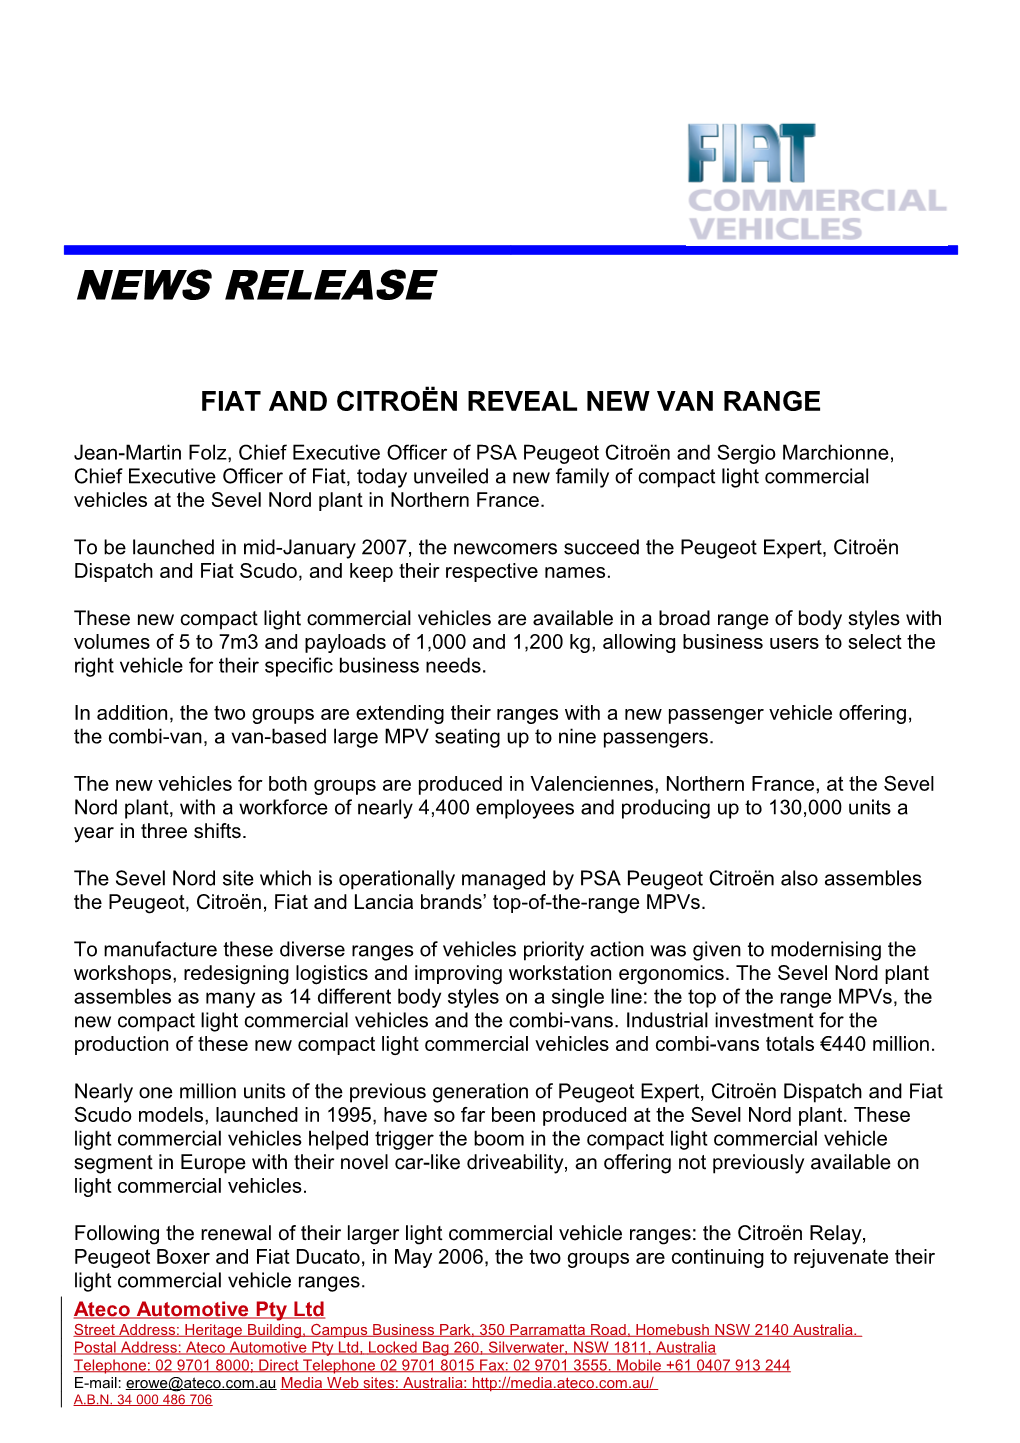 Fiat and Citroën Reveal New Van Range